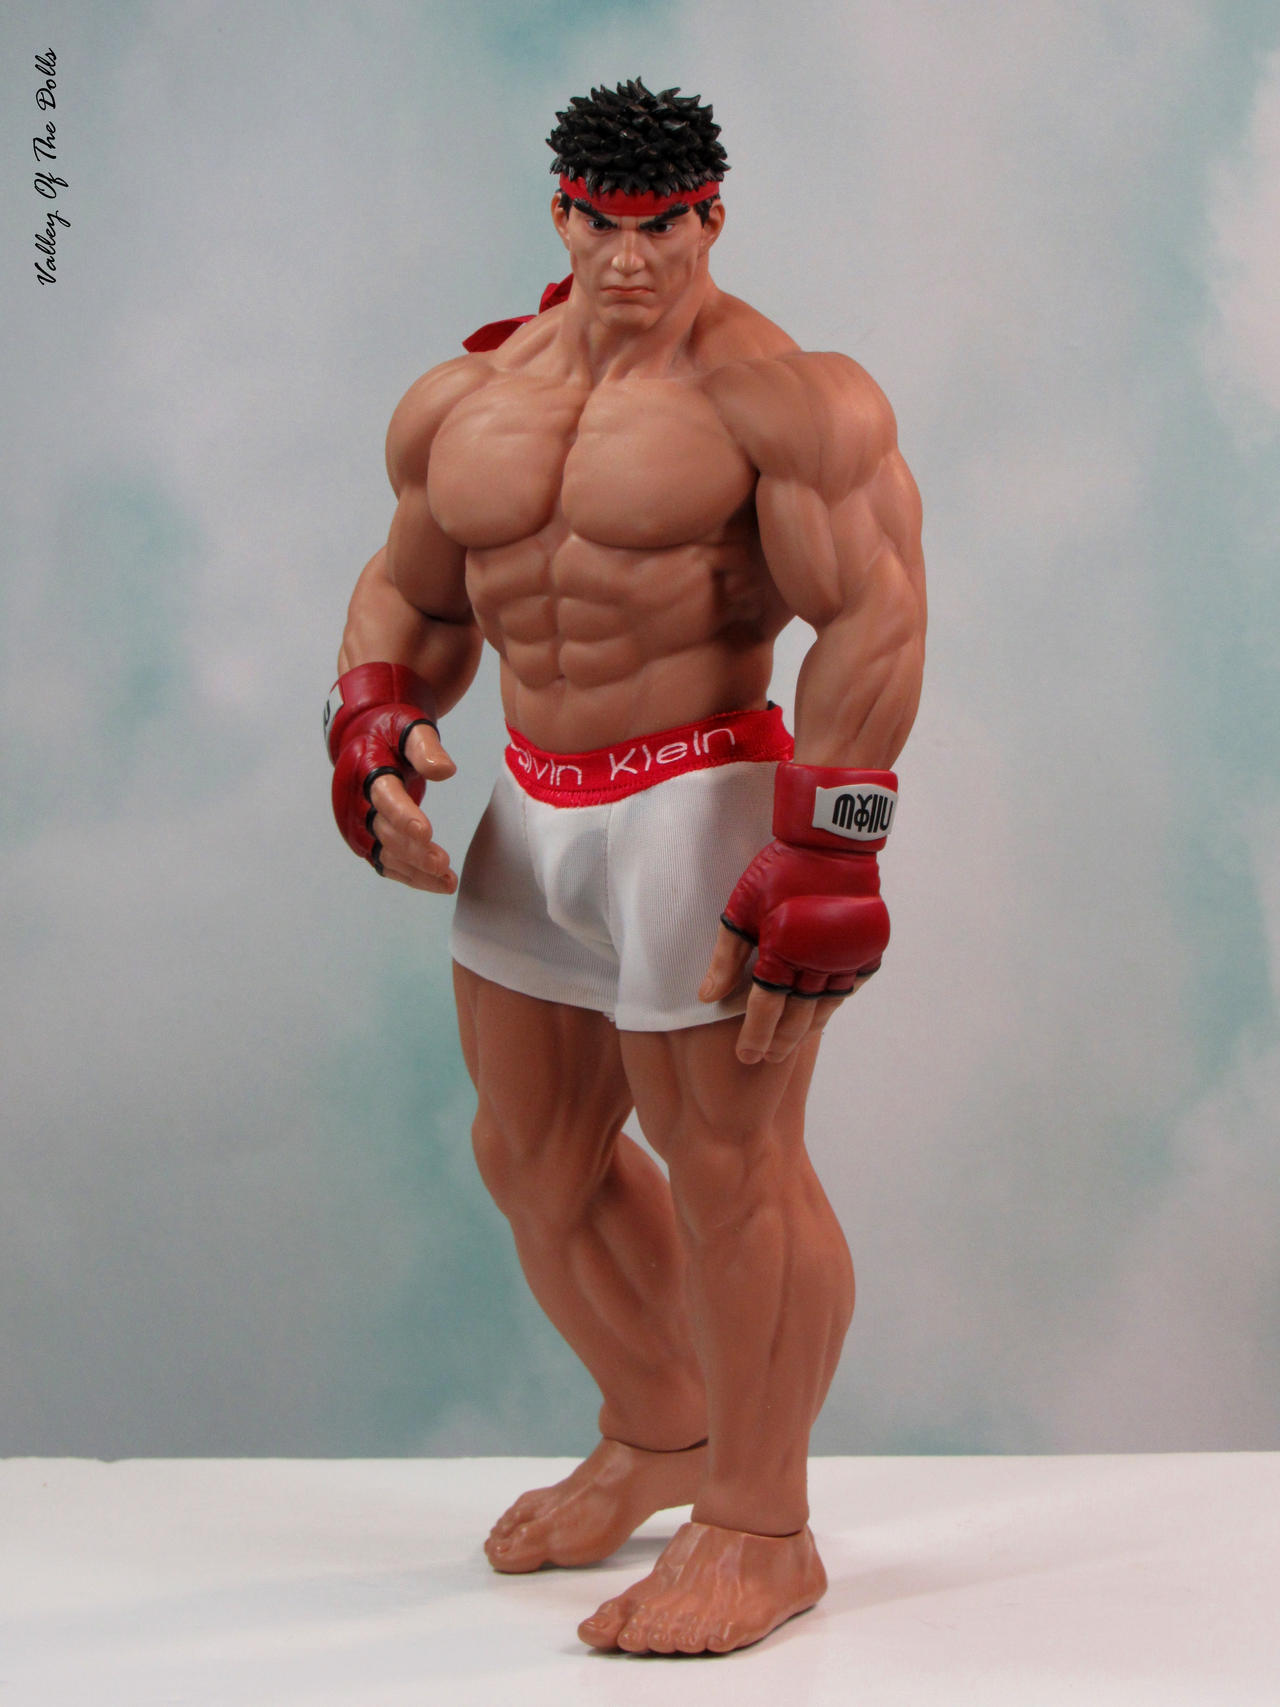 Ryu From Street Fighter by enkilakasha on DeviantArt